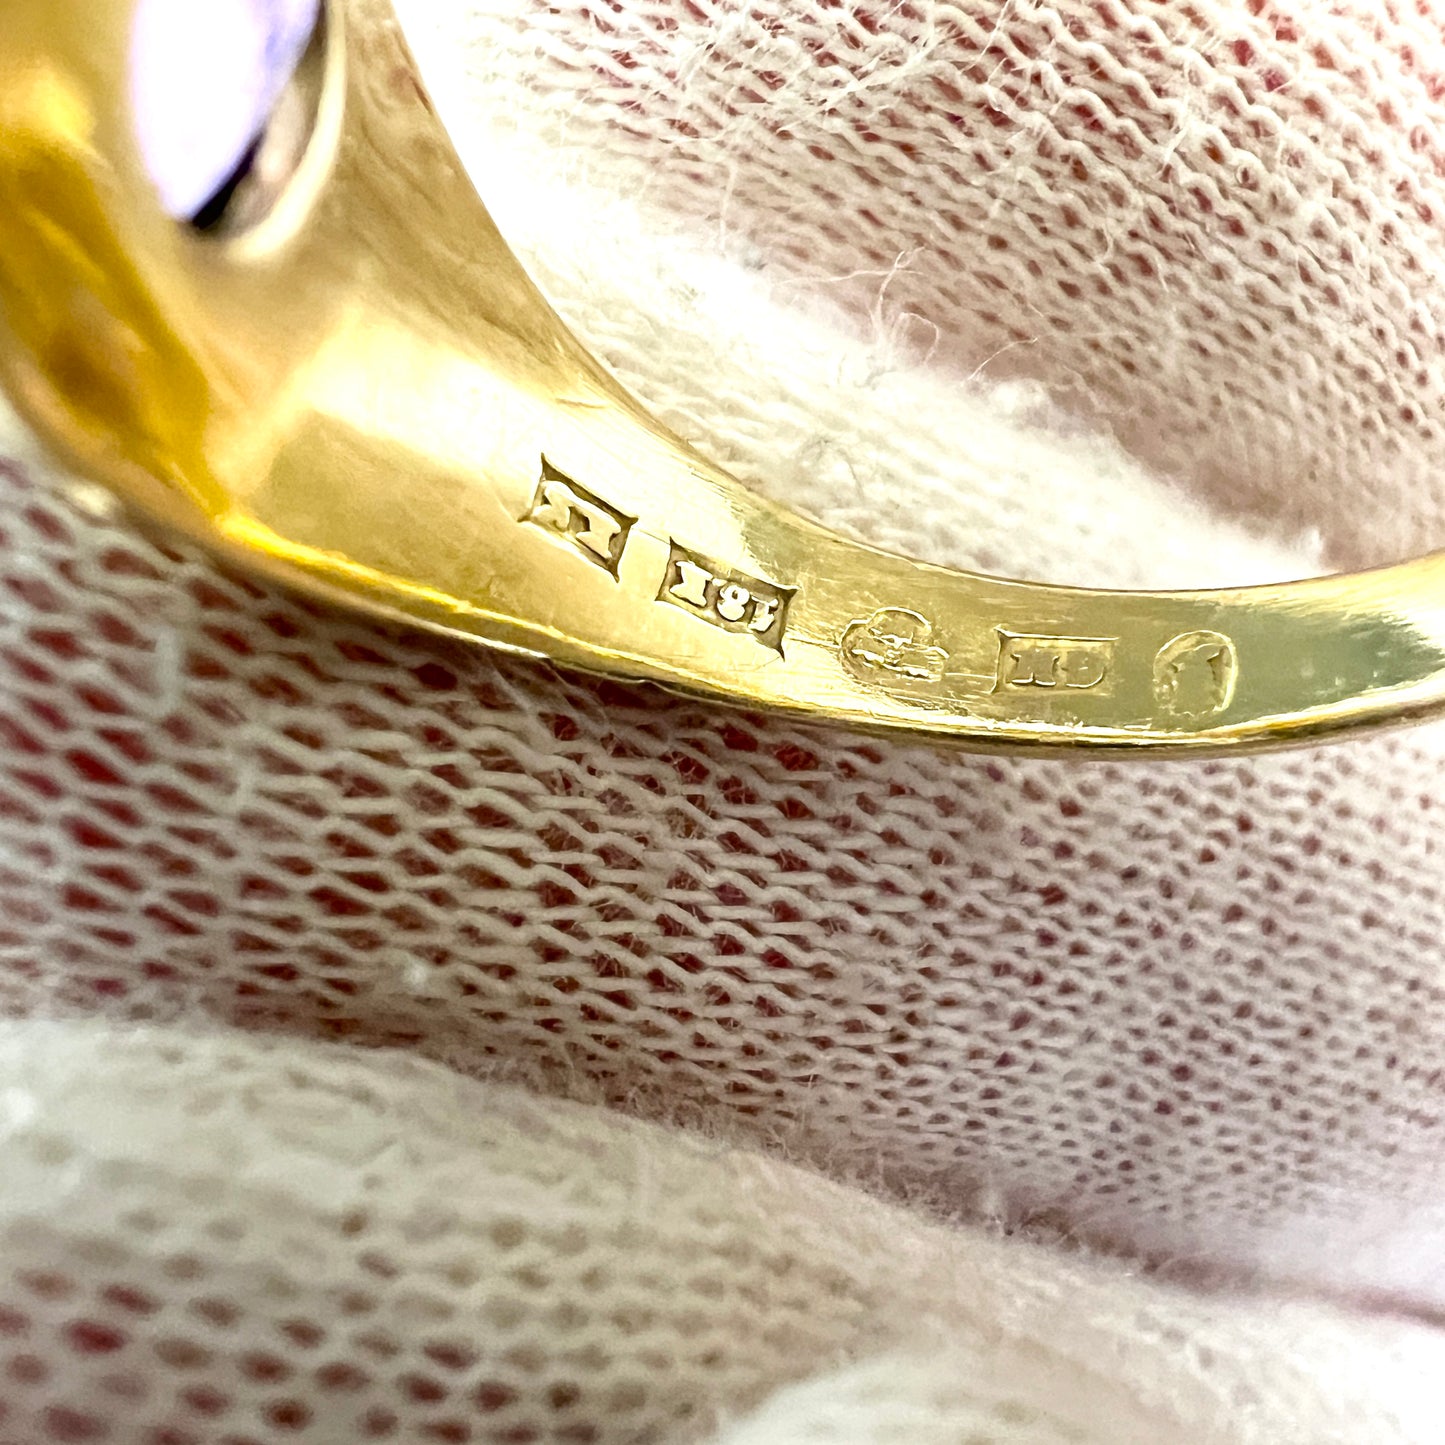 G Möllenborg, Sweden 1864. Antique Victorian 18k Gold Amethyst Ring.